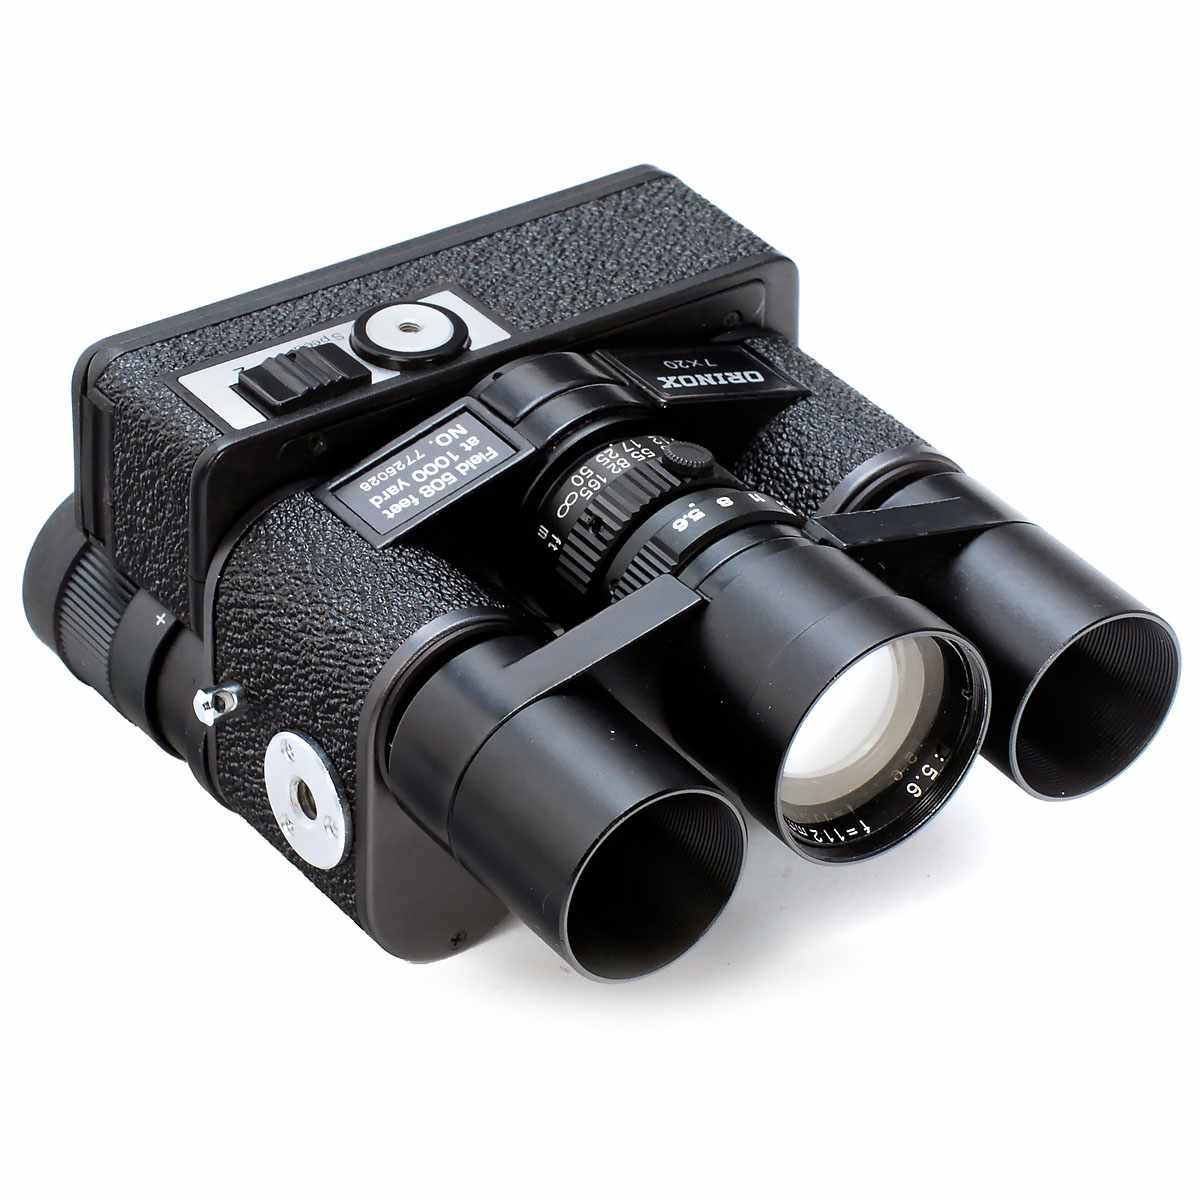 Orinox Binoculars Camera Asia American Industries, Tokyo. Binoculars 7 x 20 with camera for 110